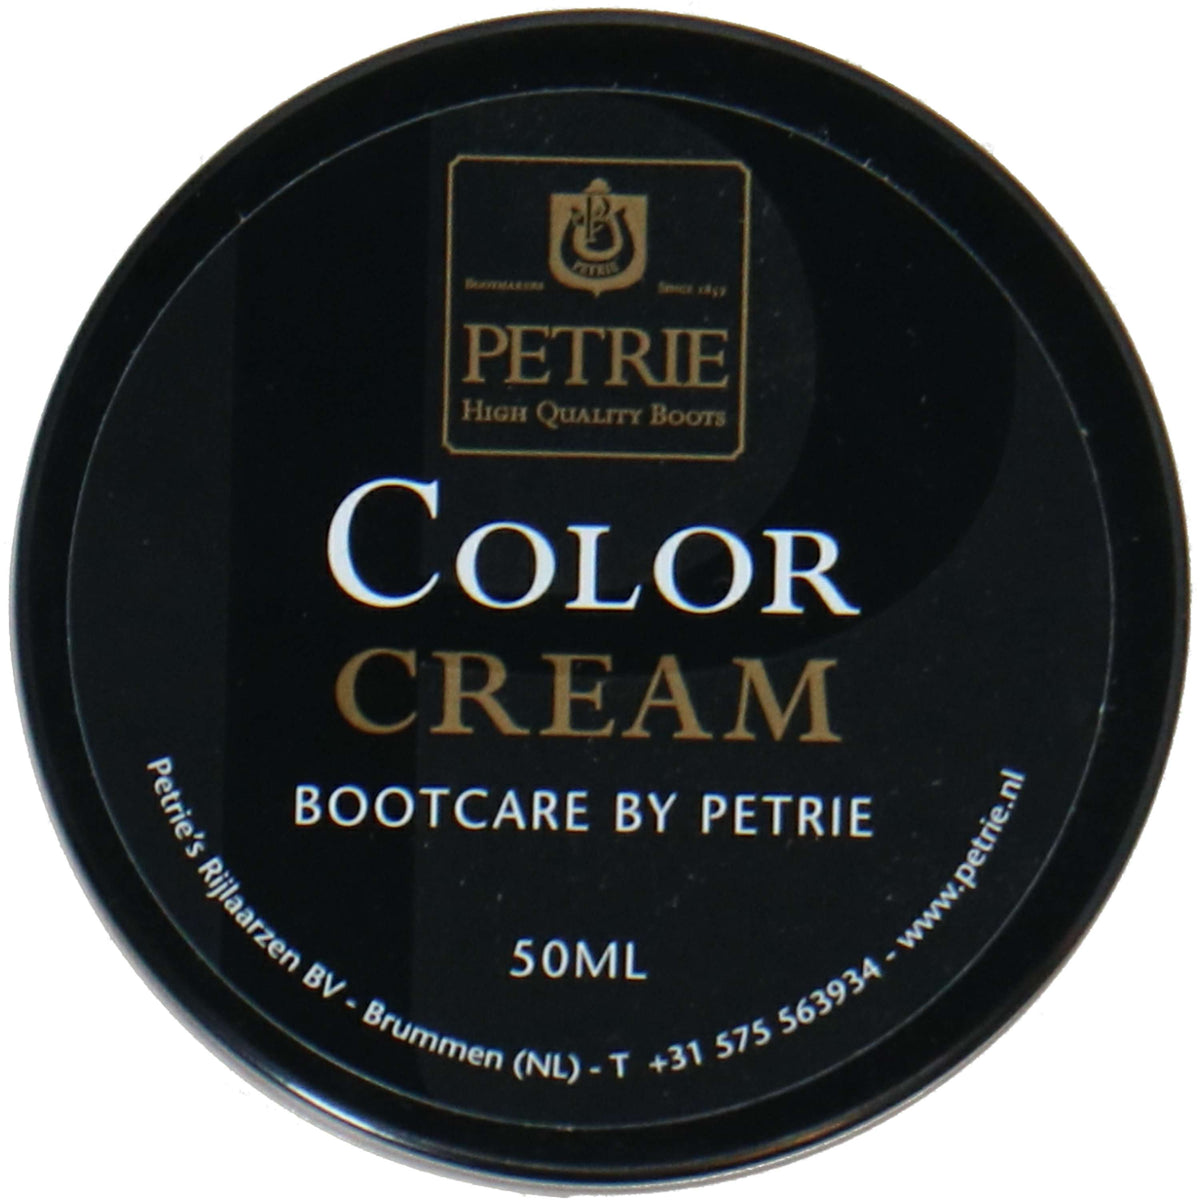 Petrie Color Cream London